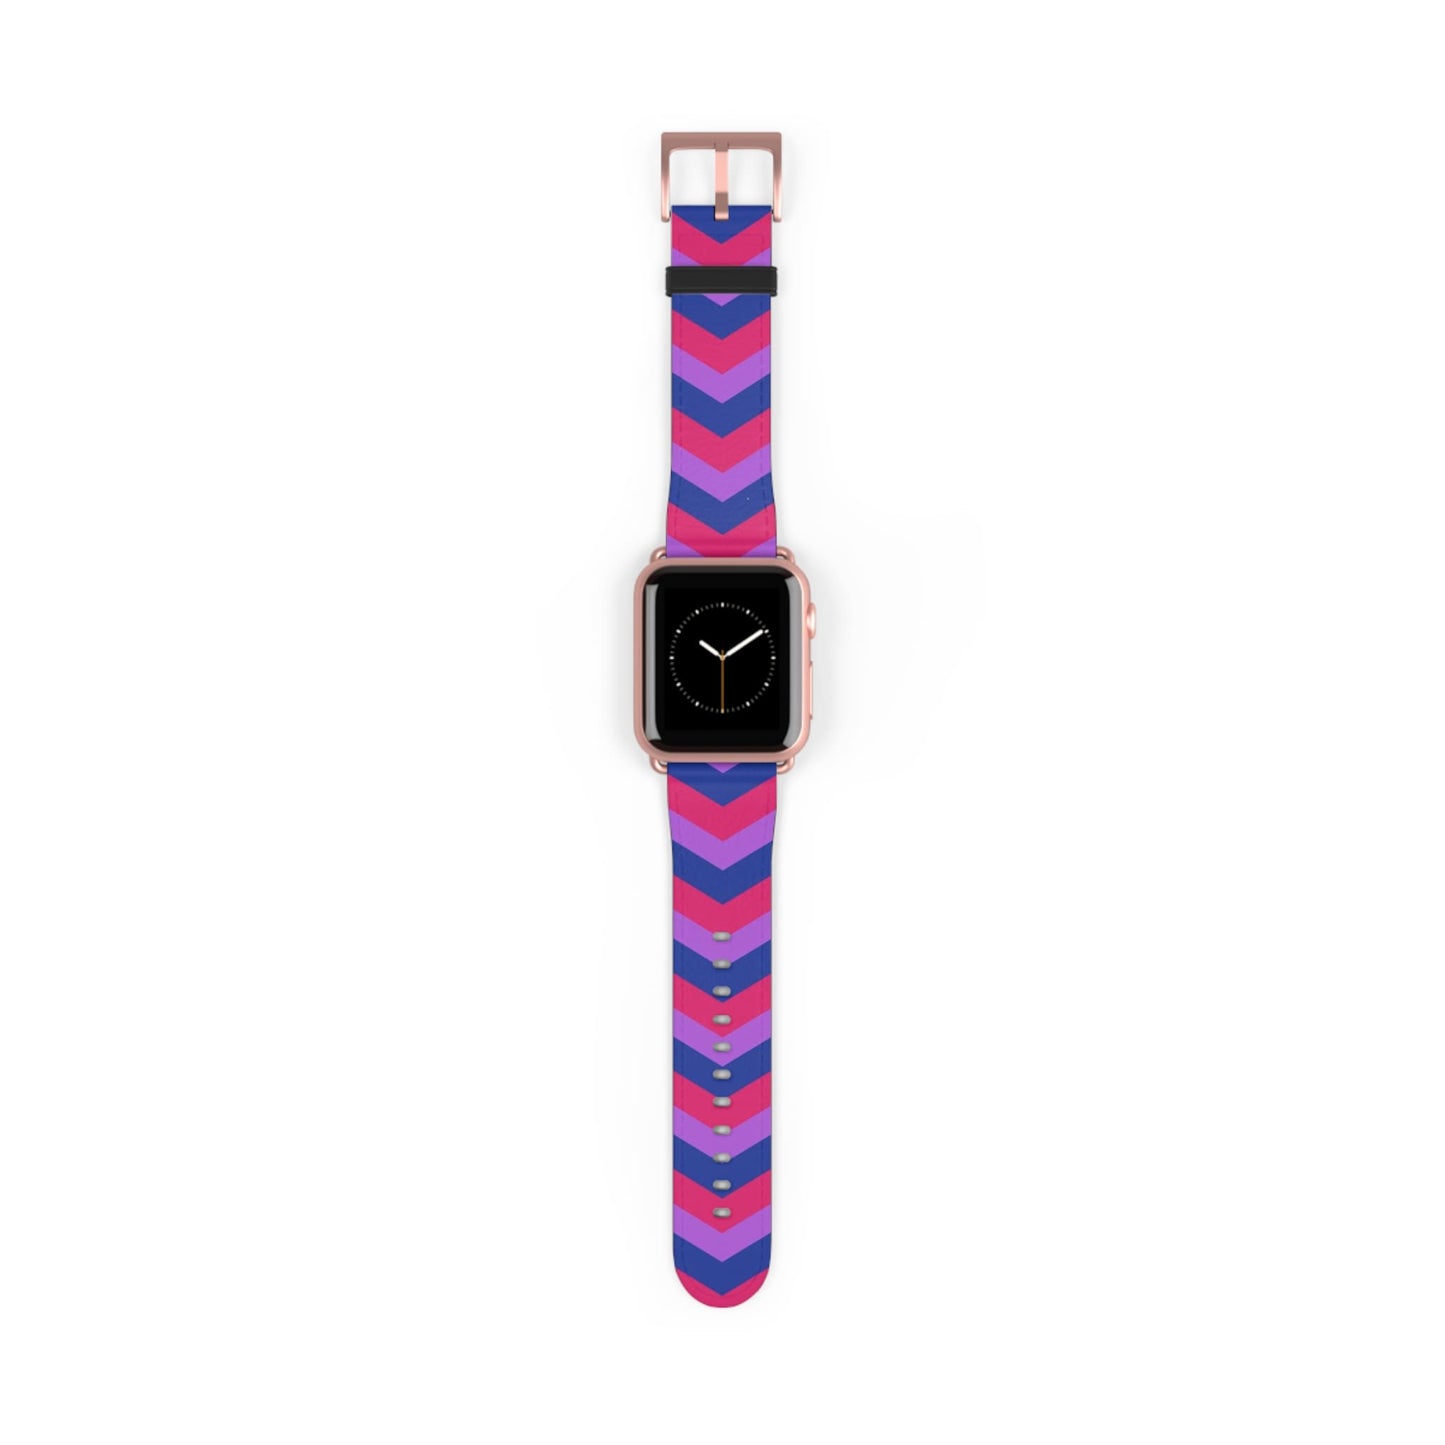 bisexual apple watch band, discreet chevron pattern, rose gold